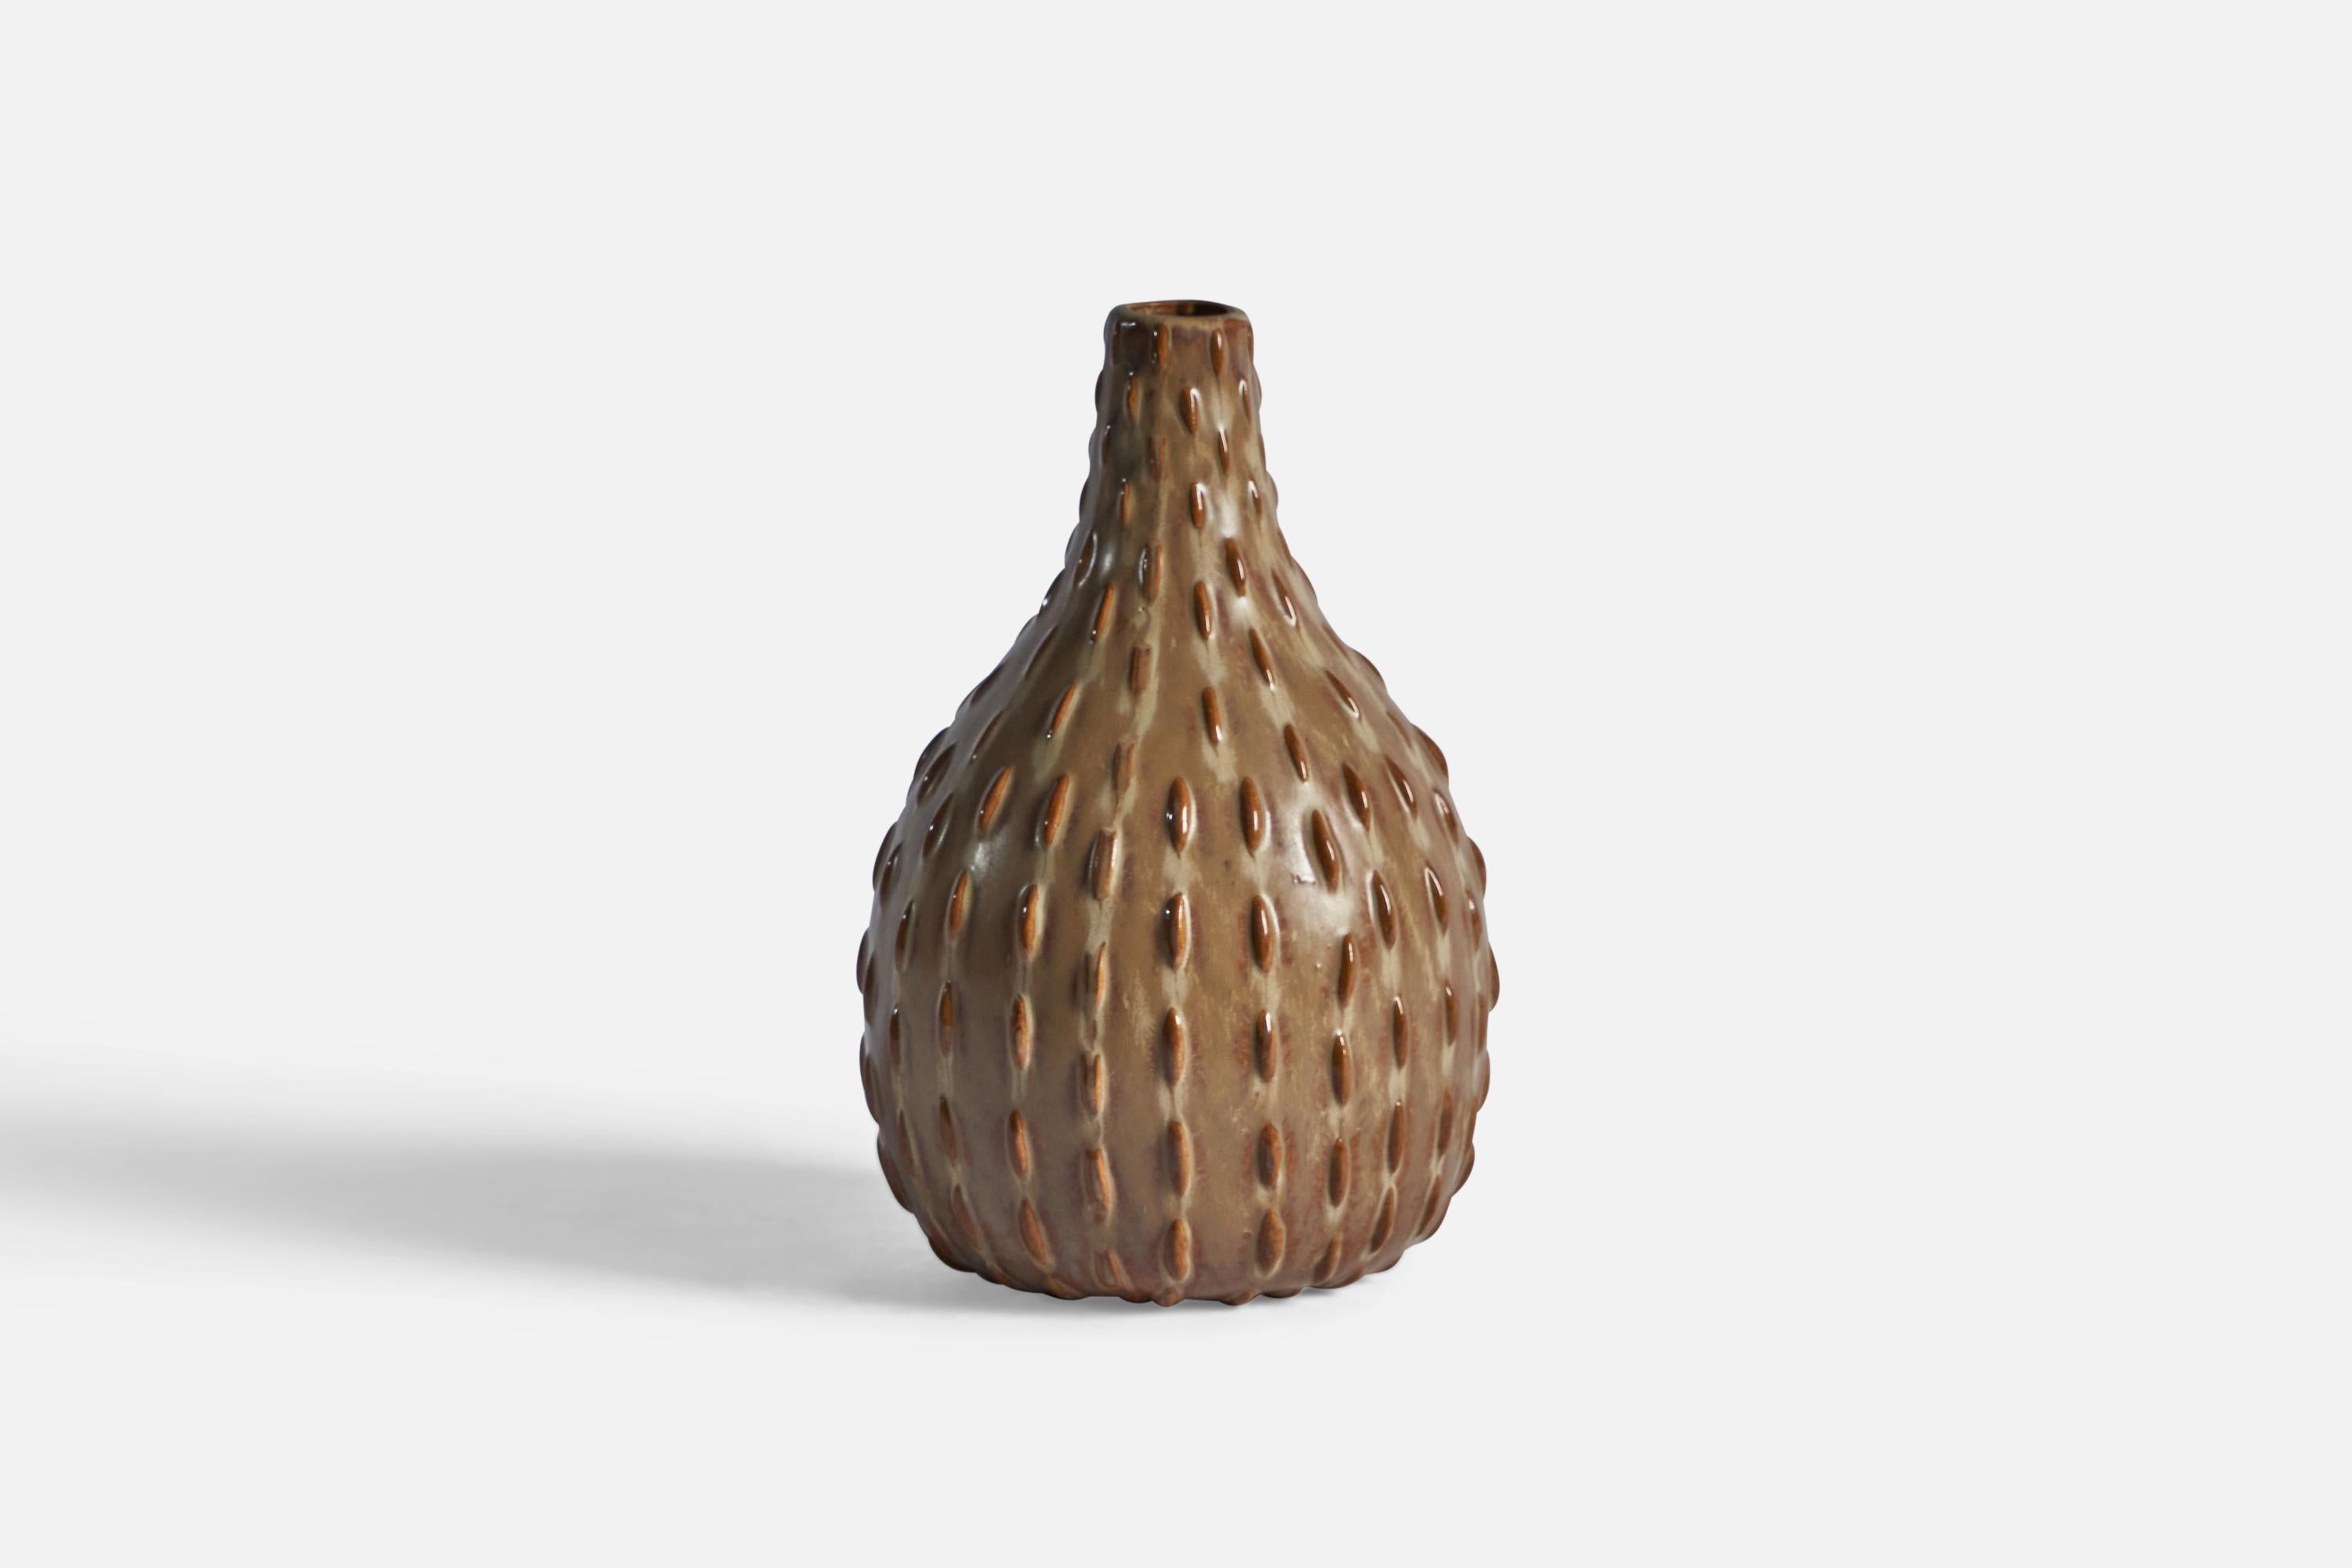 A brown-glazed budded ceramic vase, designed and produced in Denmark, c. 1970s.